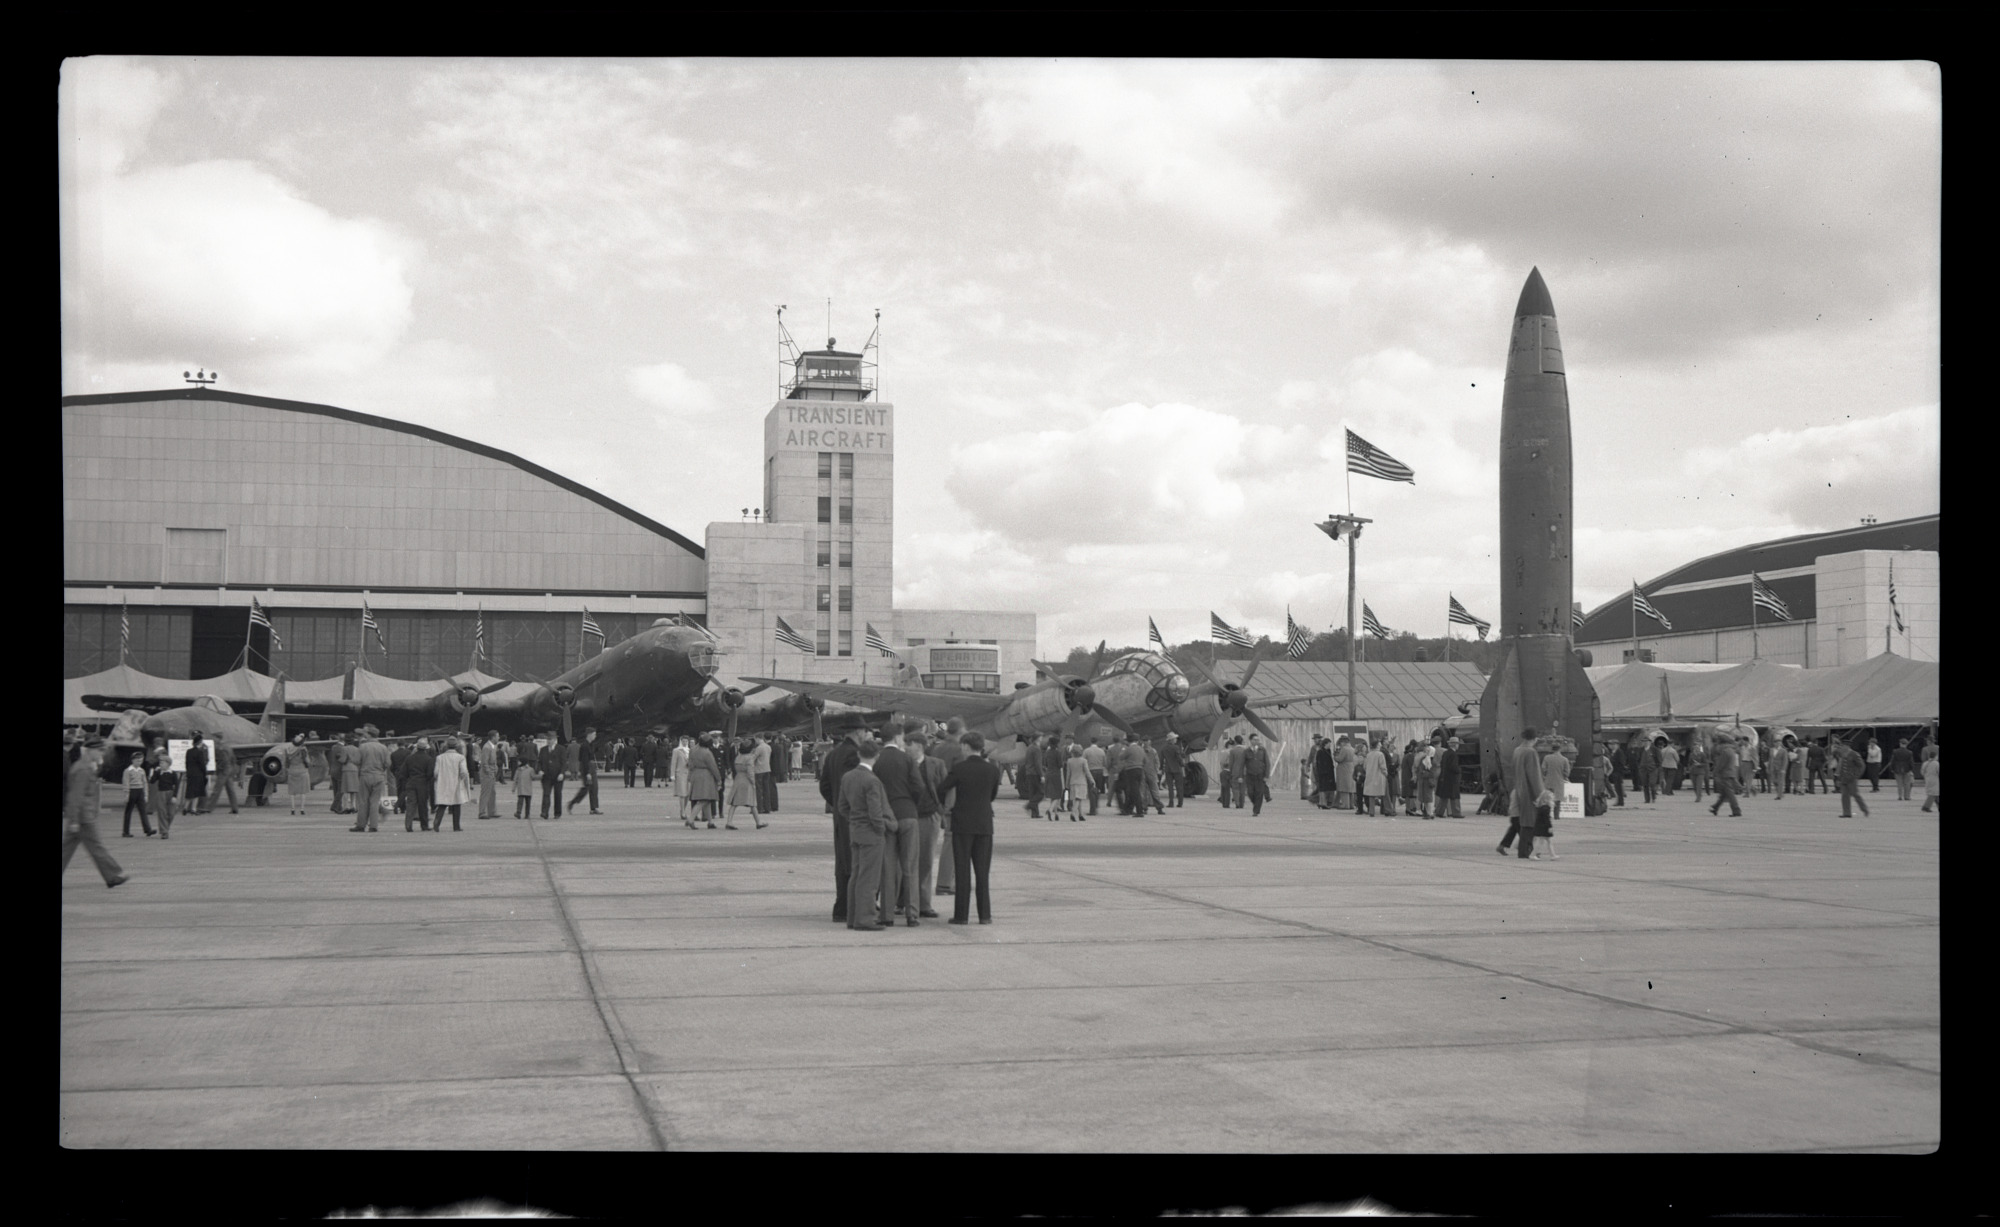 October 1945 Air Forces Fair at Wright